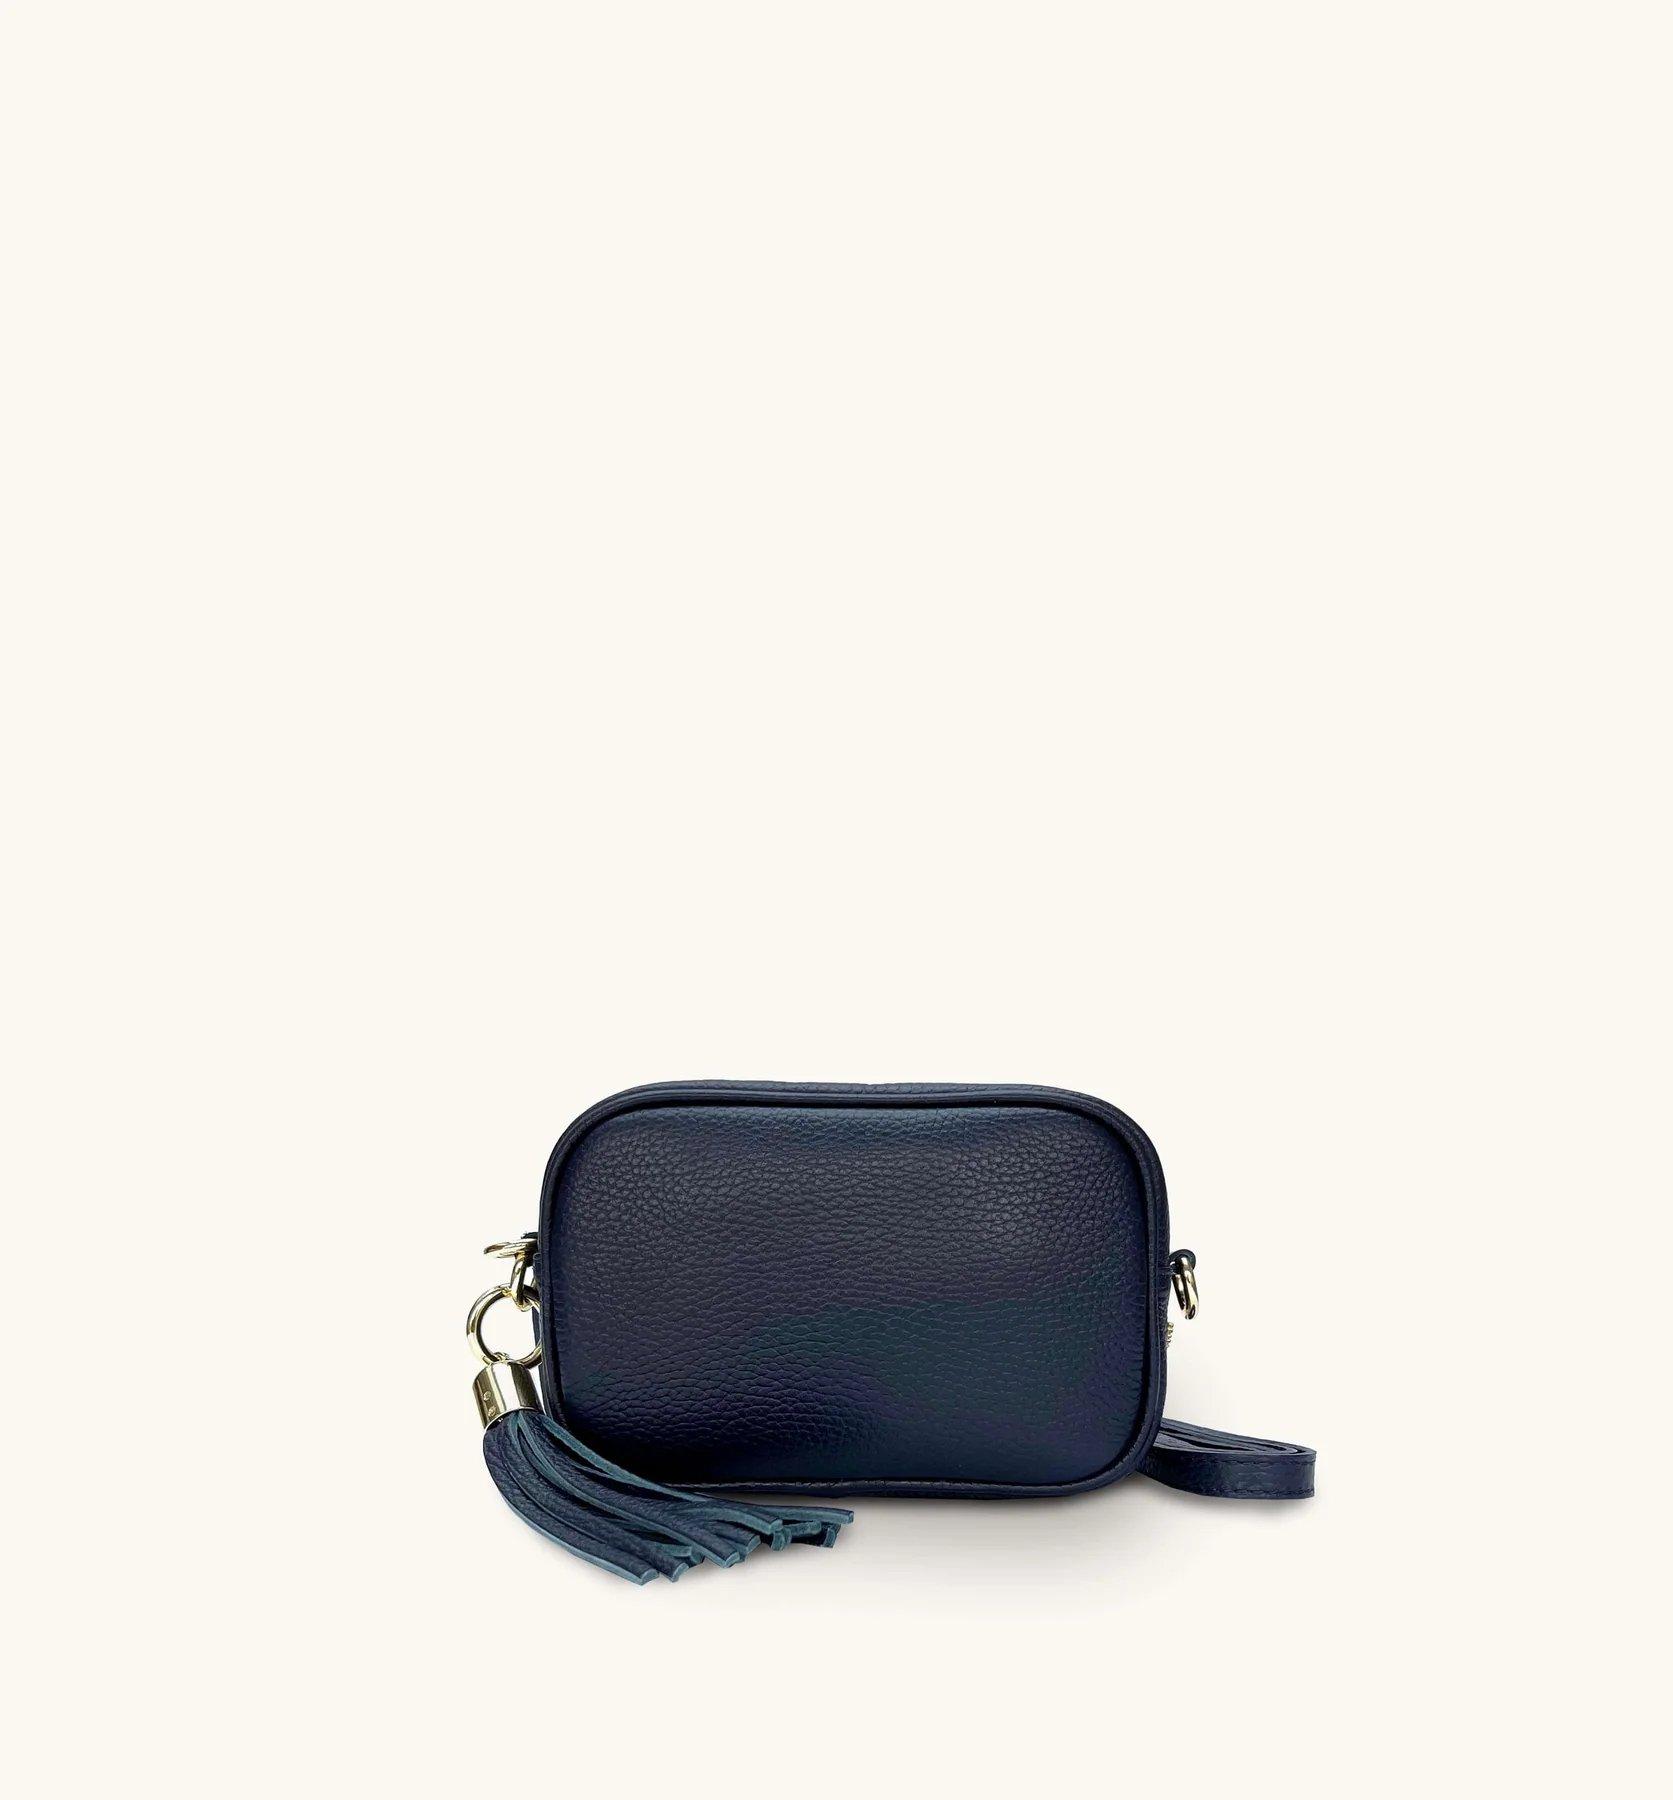 Темно-синяя кожаная сумка для телефона Mini с кисточками Apatchy London, темно-синий